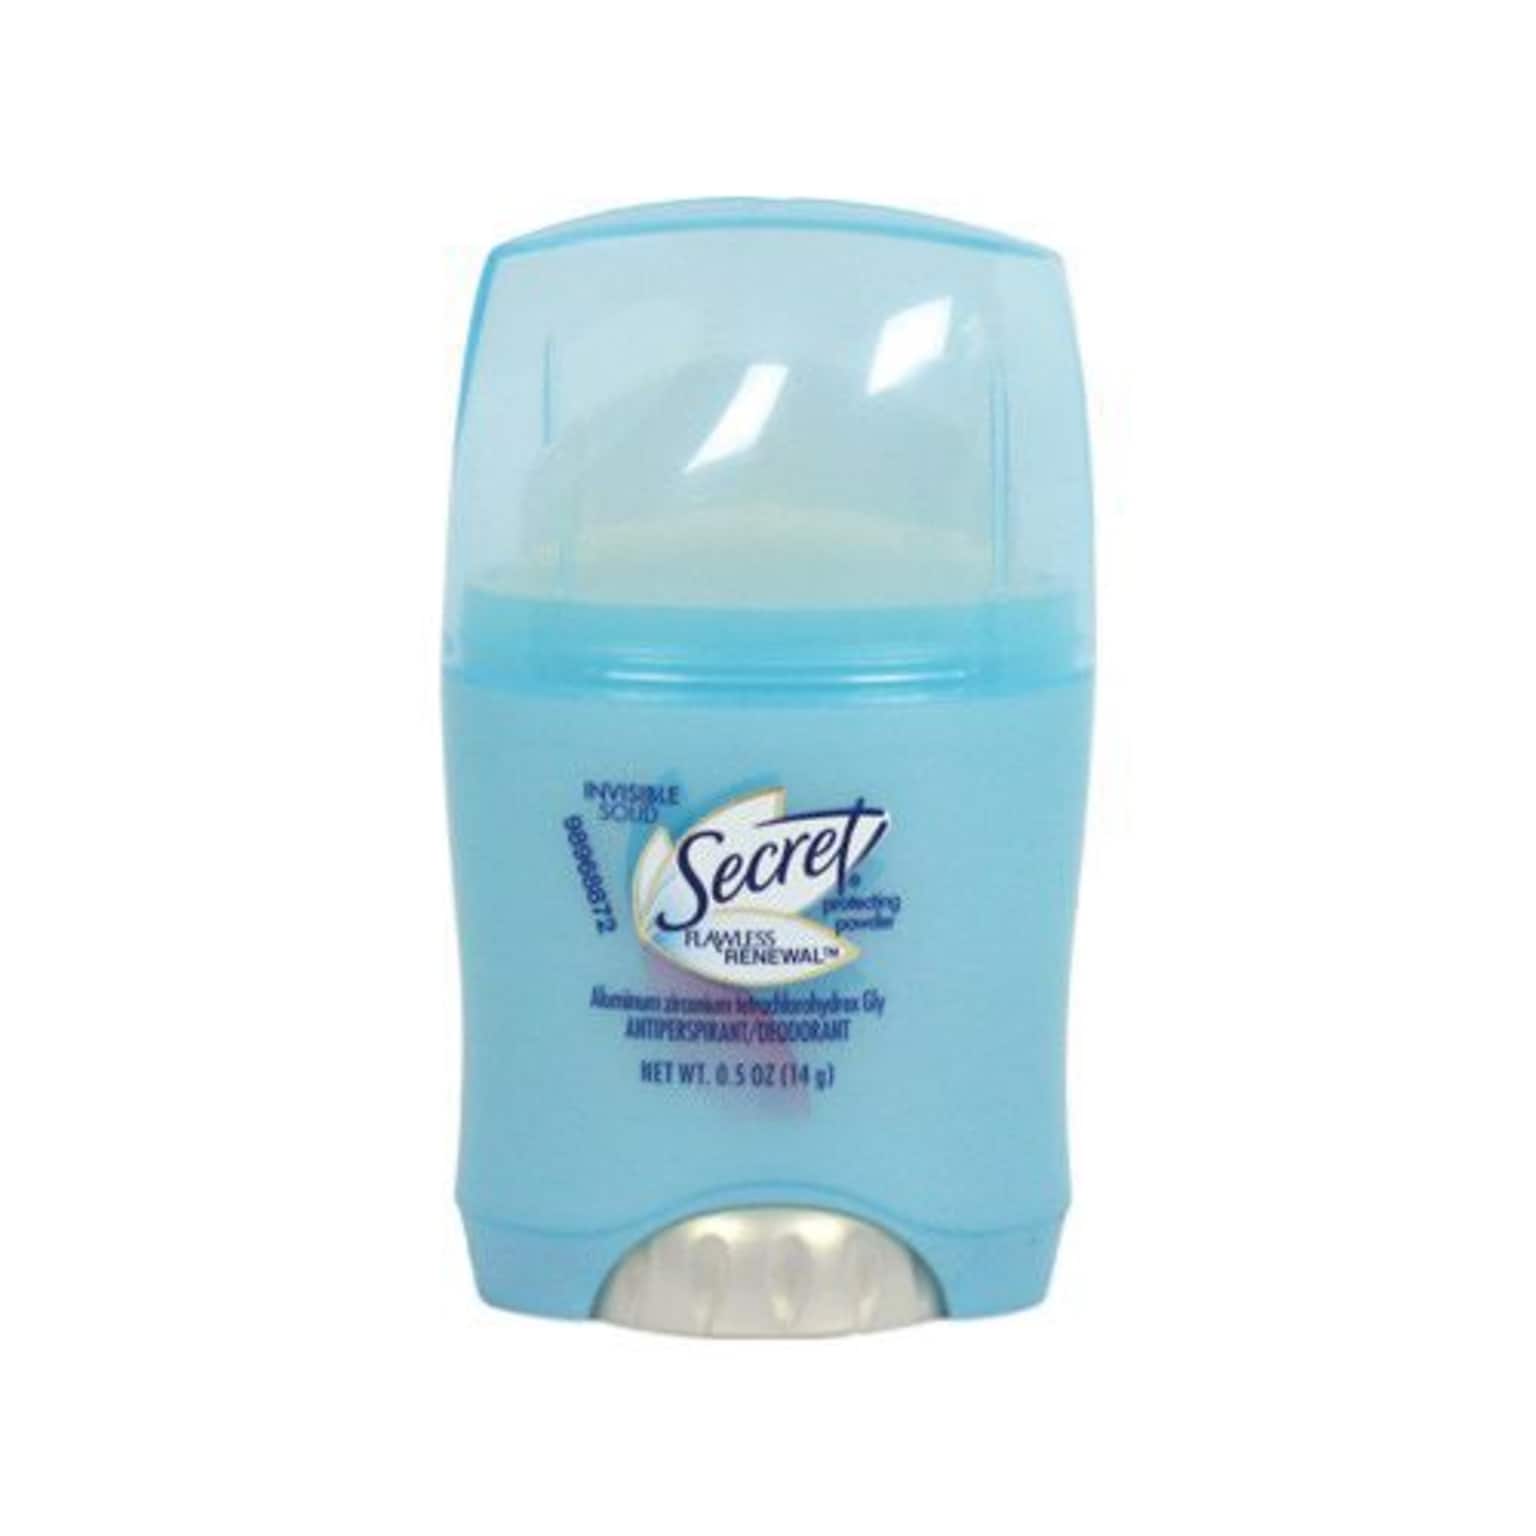 Secret Flawless Renewal Invisible Solid Antiperspirant & Deodorant, Protecting Powder Sent, 0.5 oz. (037000001317)